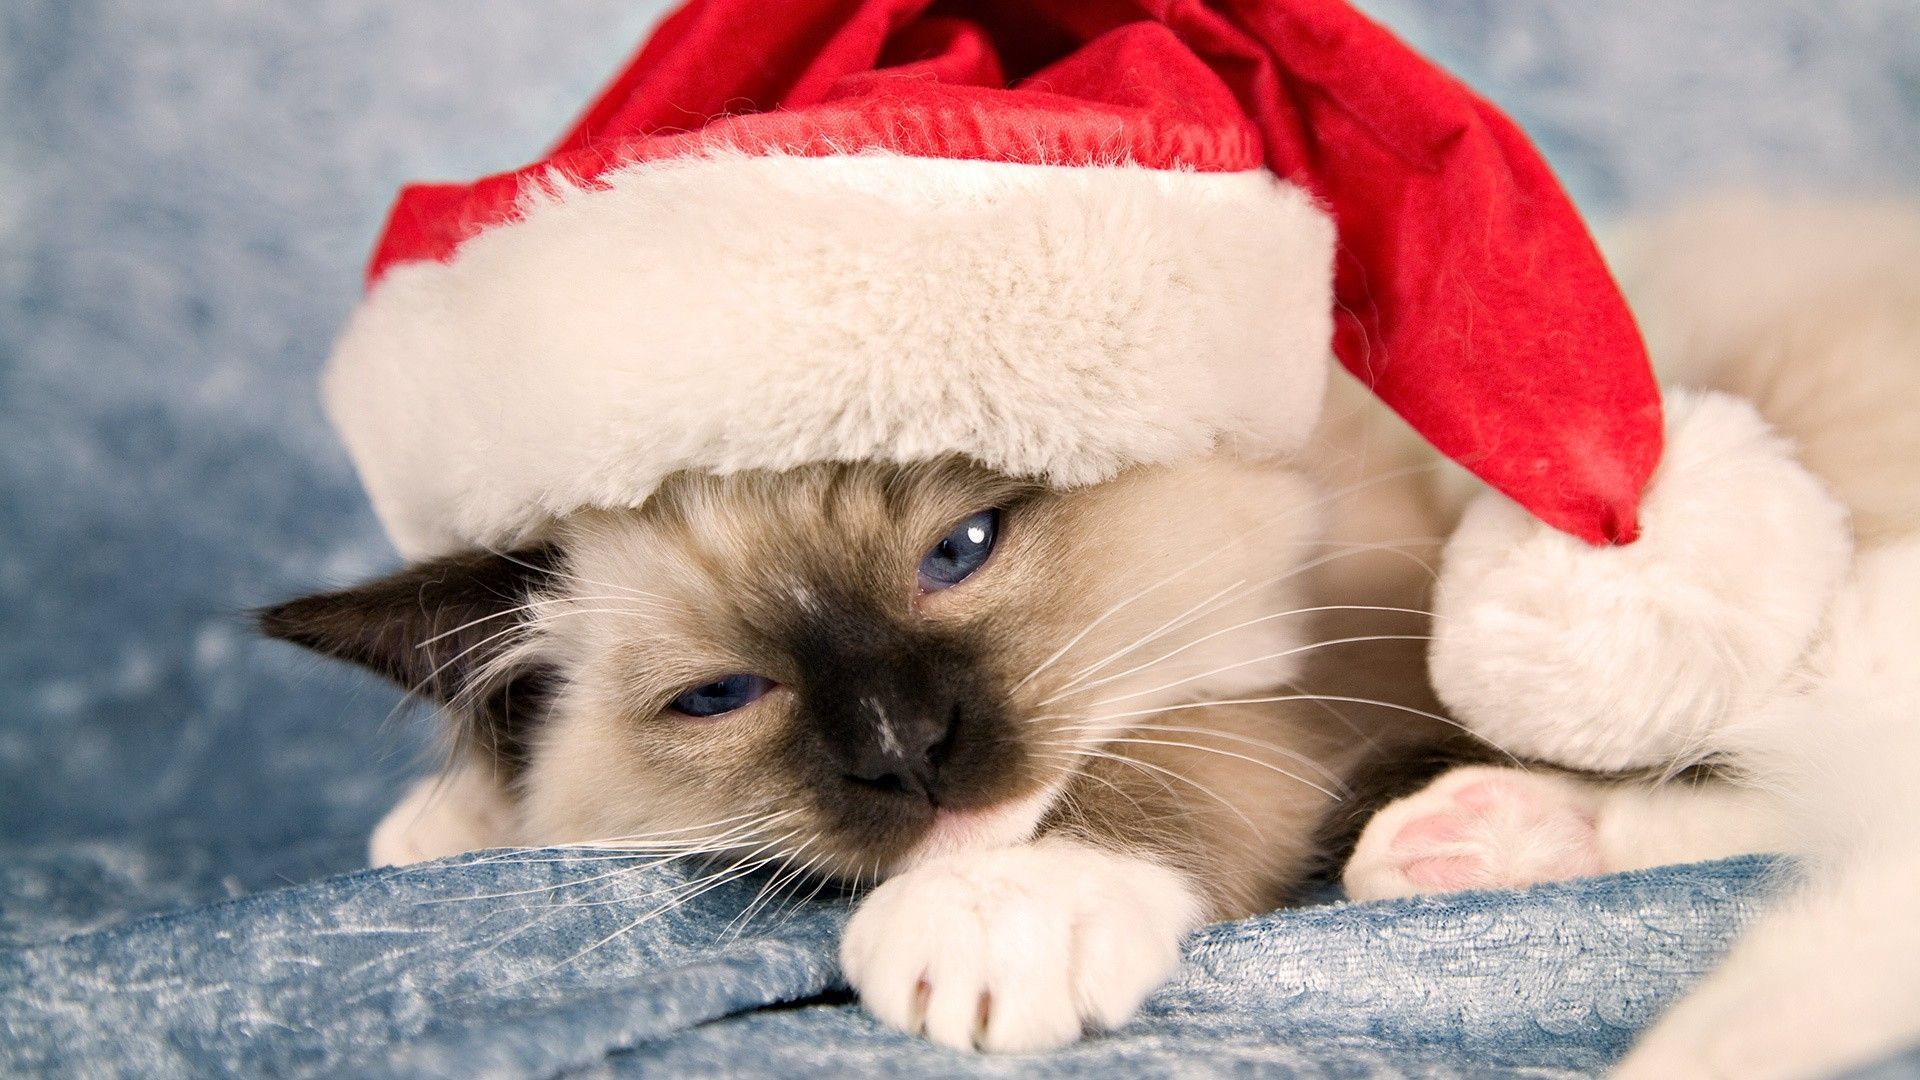 grumpy cat christmas. Grumpy Cat Christmas Wallpaper Desktop And iPad Grumpy Cat Christmas. Christmas cats, Funny cat wallpaper, Grumpy cat christmas